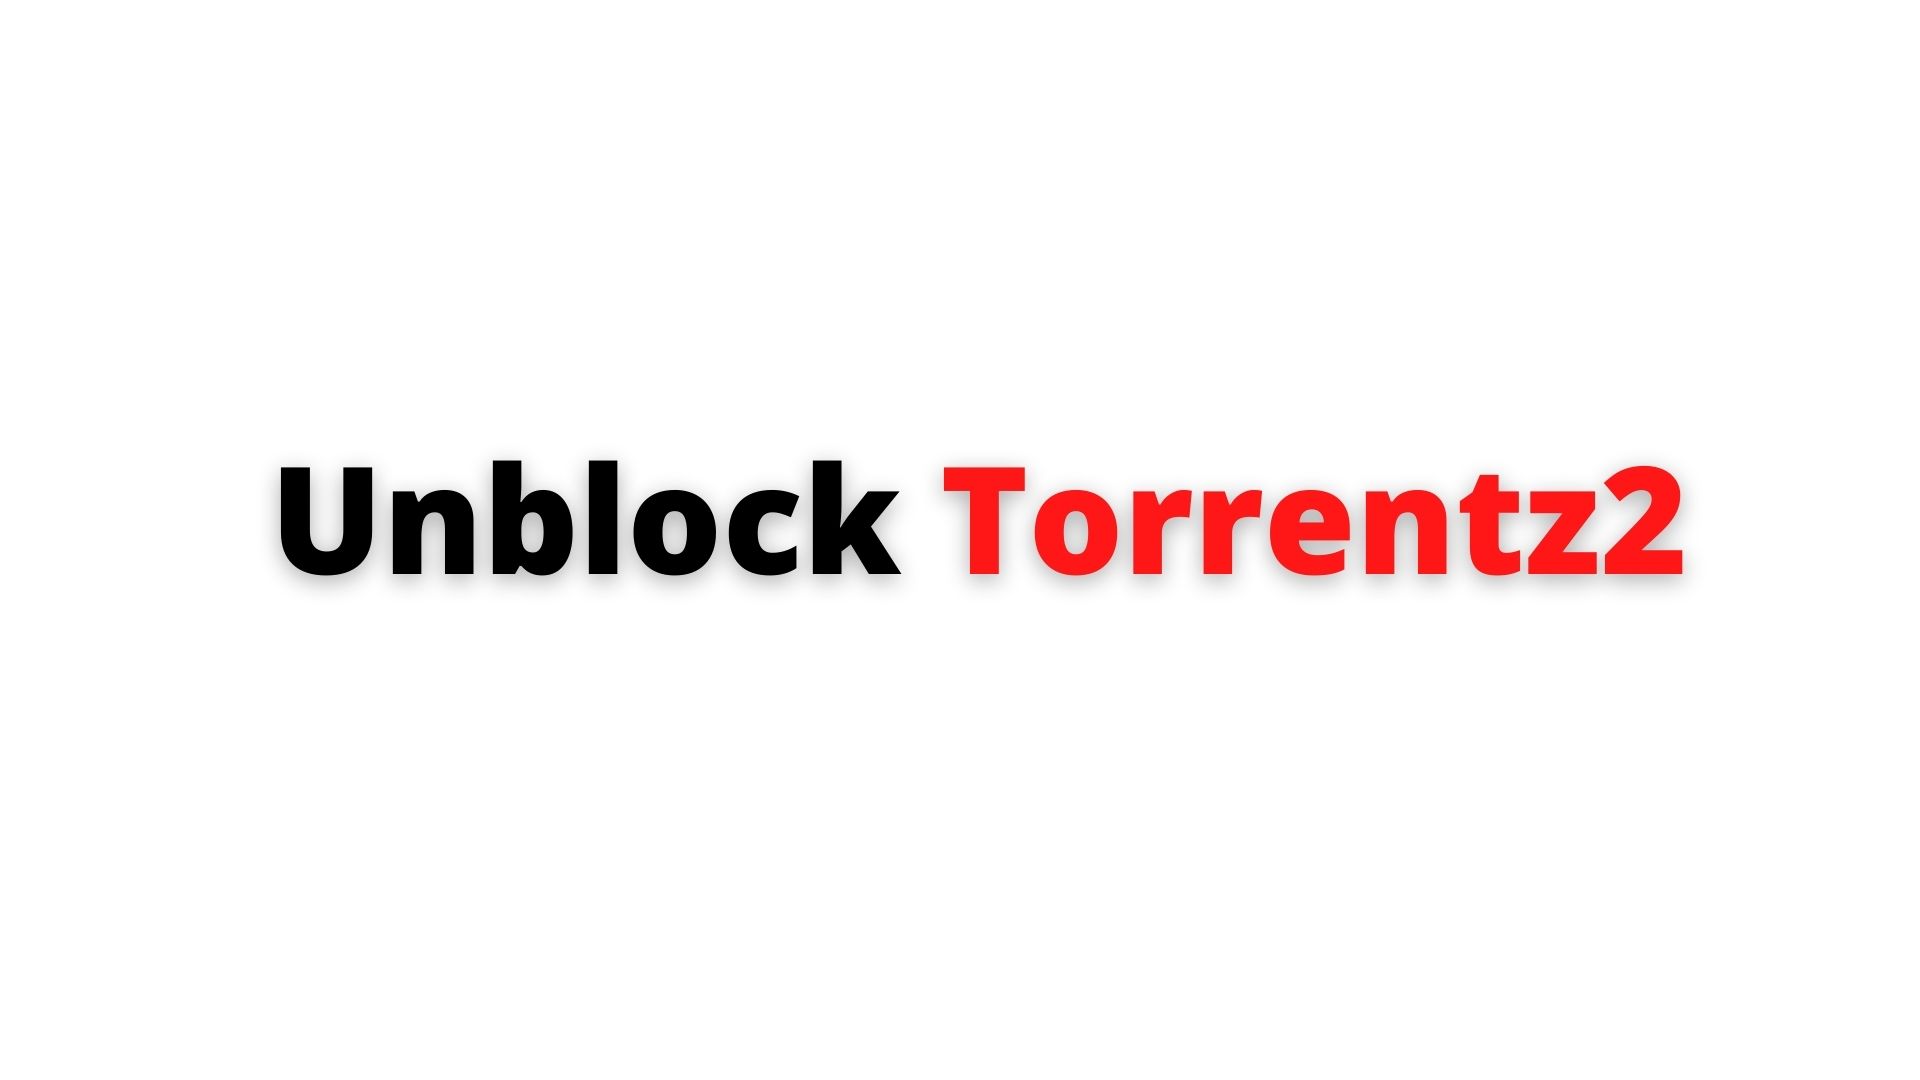 public/uploads/2022/01/Unblock-Torrentz2.jpg